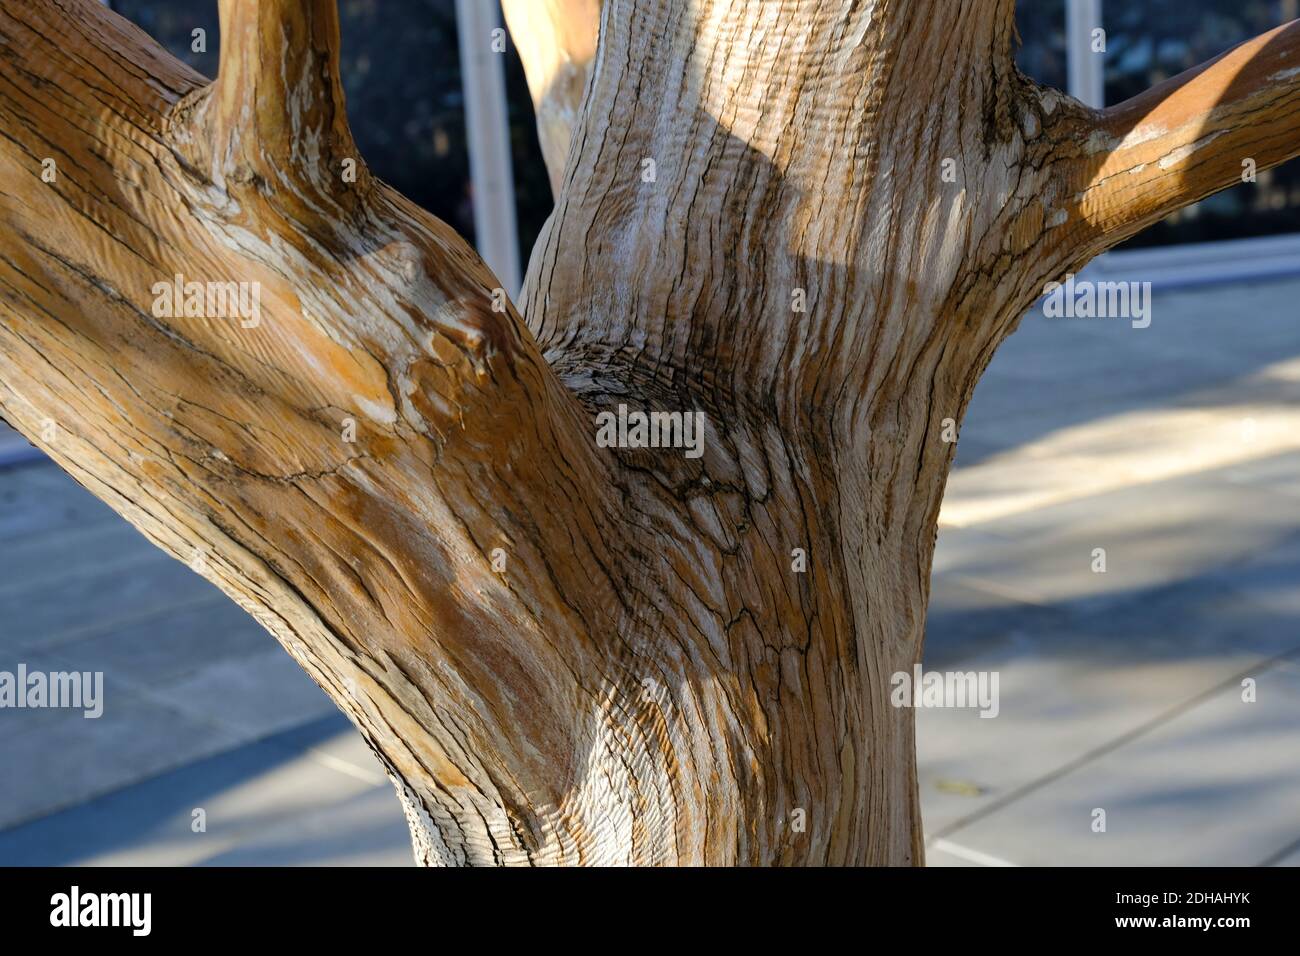 Delonix regia or Flame Tree. Wood texture, tree bark. Stock Photo